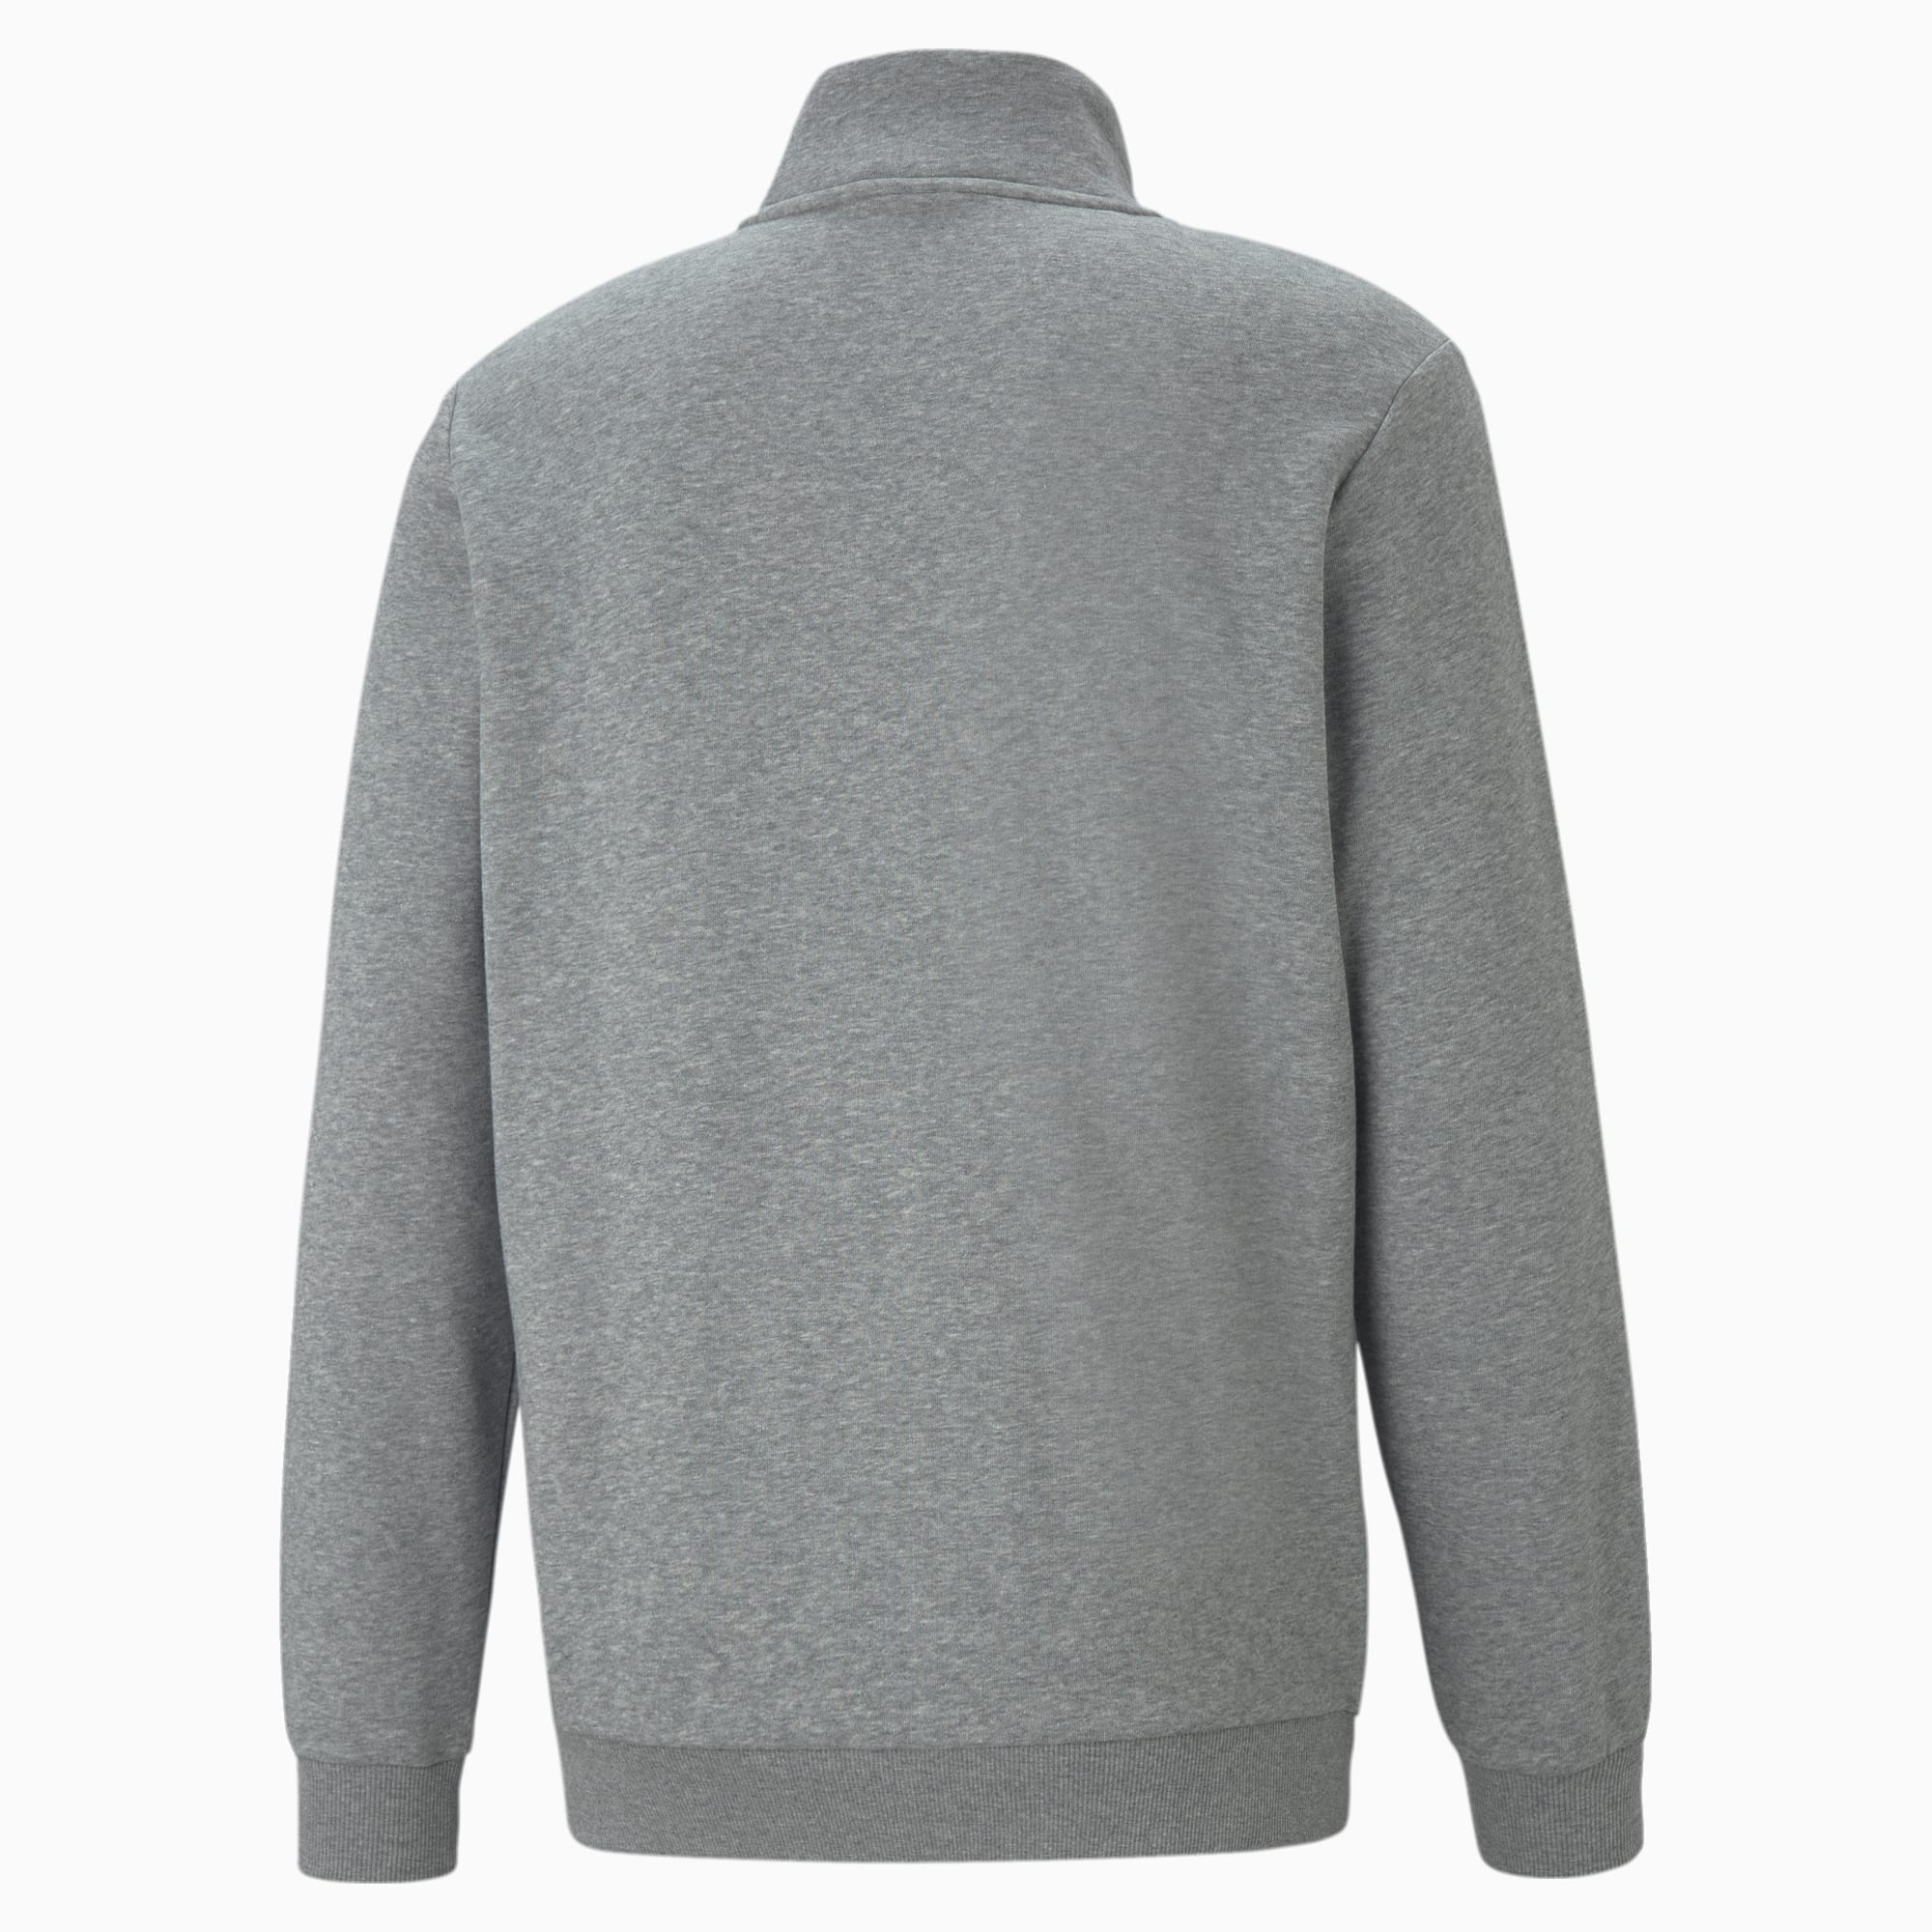 PUMA Essentials Men's Track Jacket, Medium Grey Heather, Size 4XL, Clothing